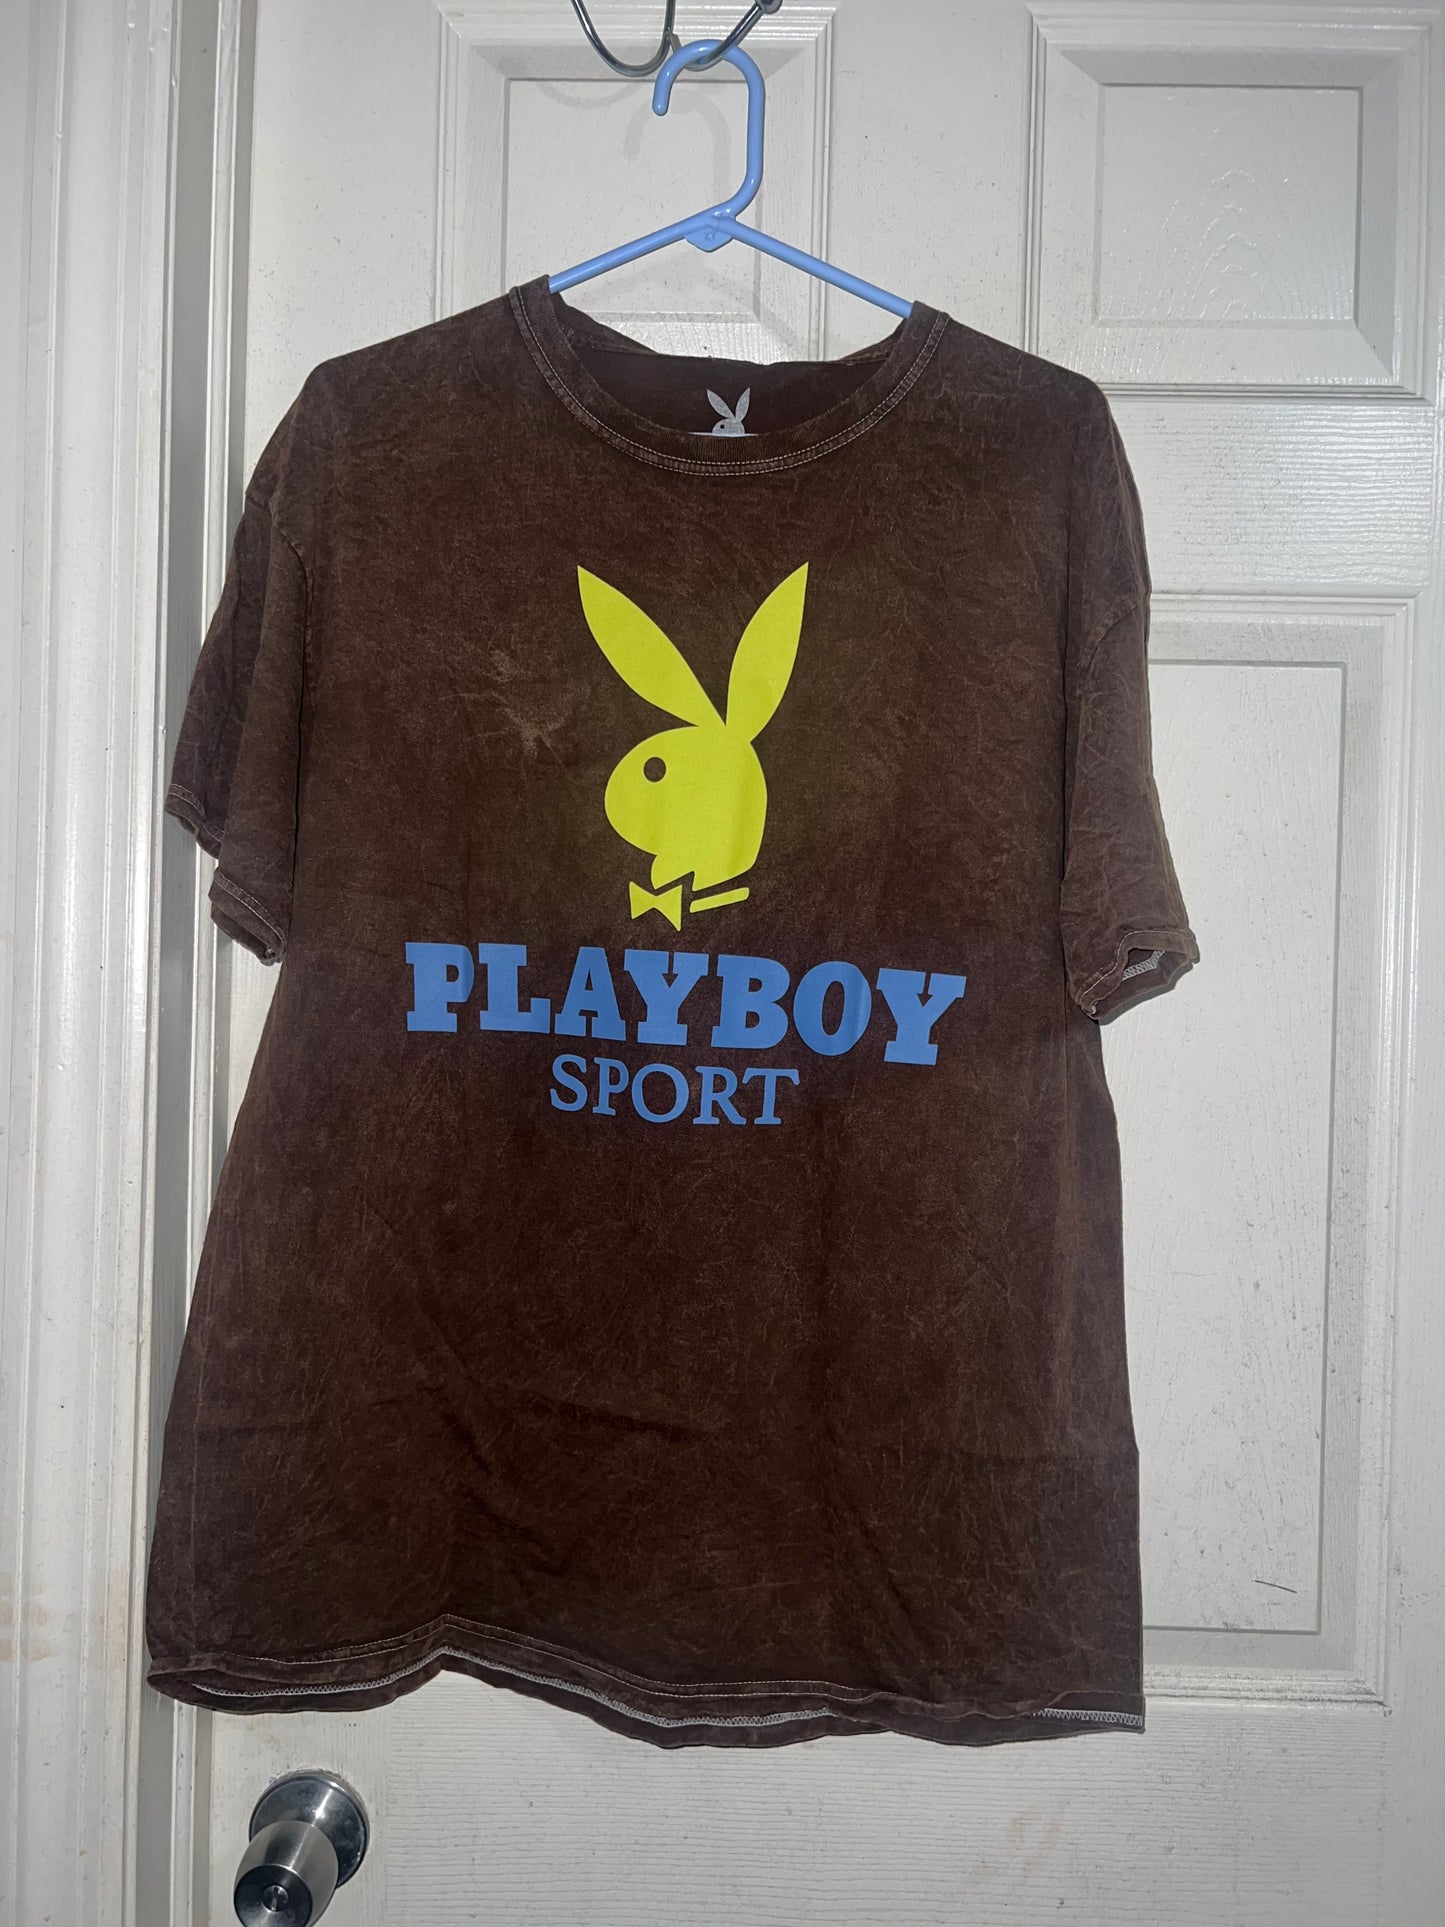 Playboy Sport Oversized Distressed Tee